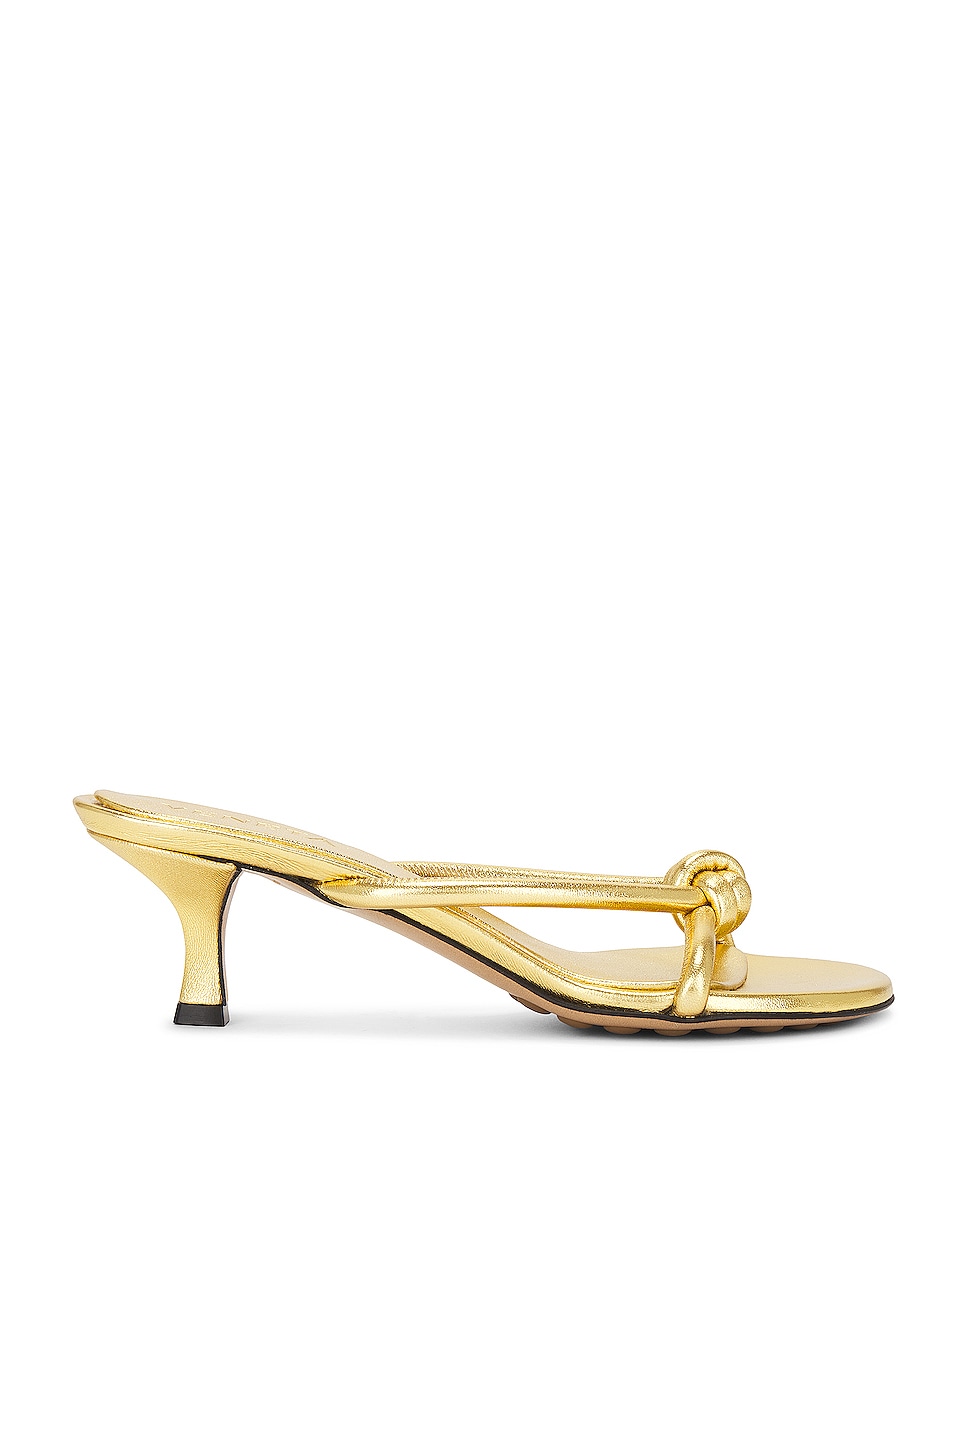 Image 1 of Bottega Veneta Metallic Blink Mule Sandal in Gold